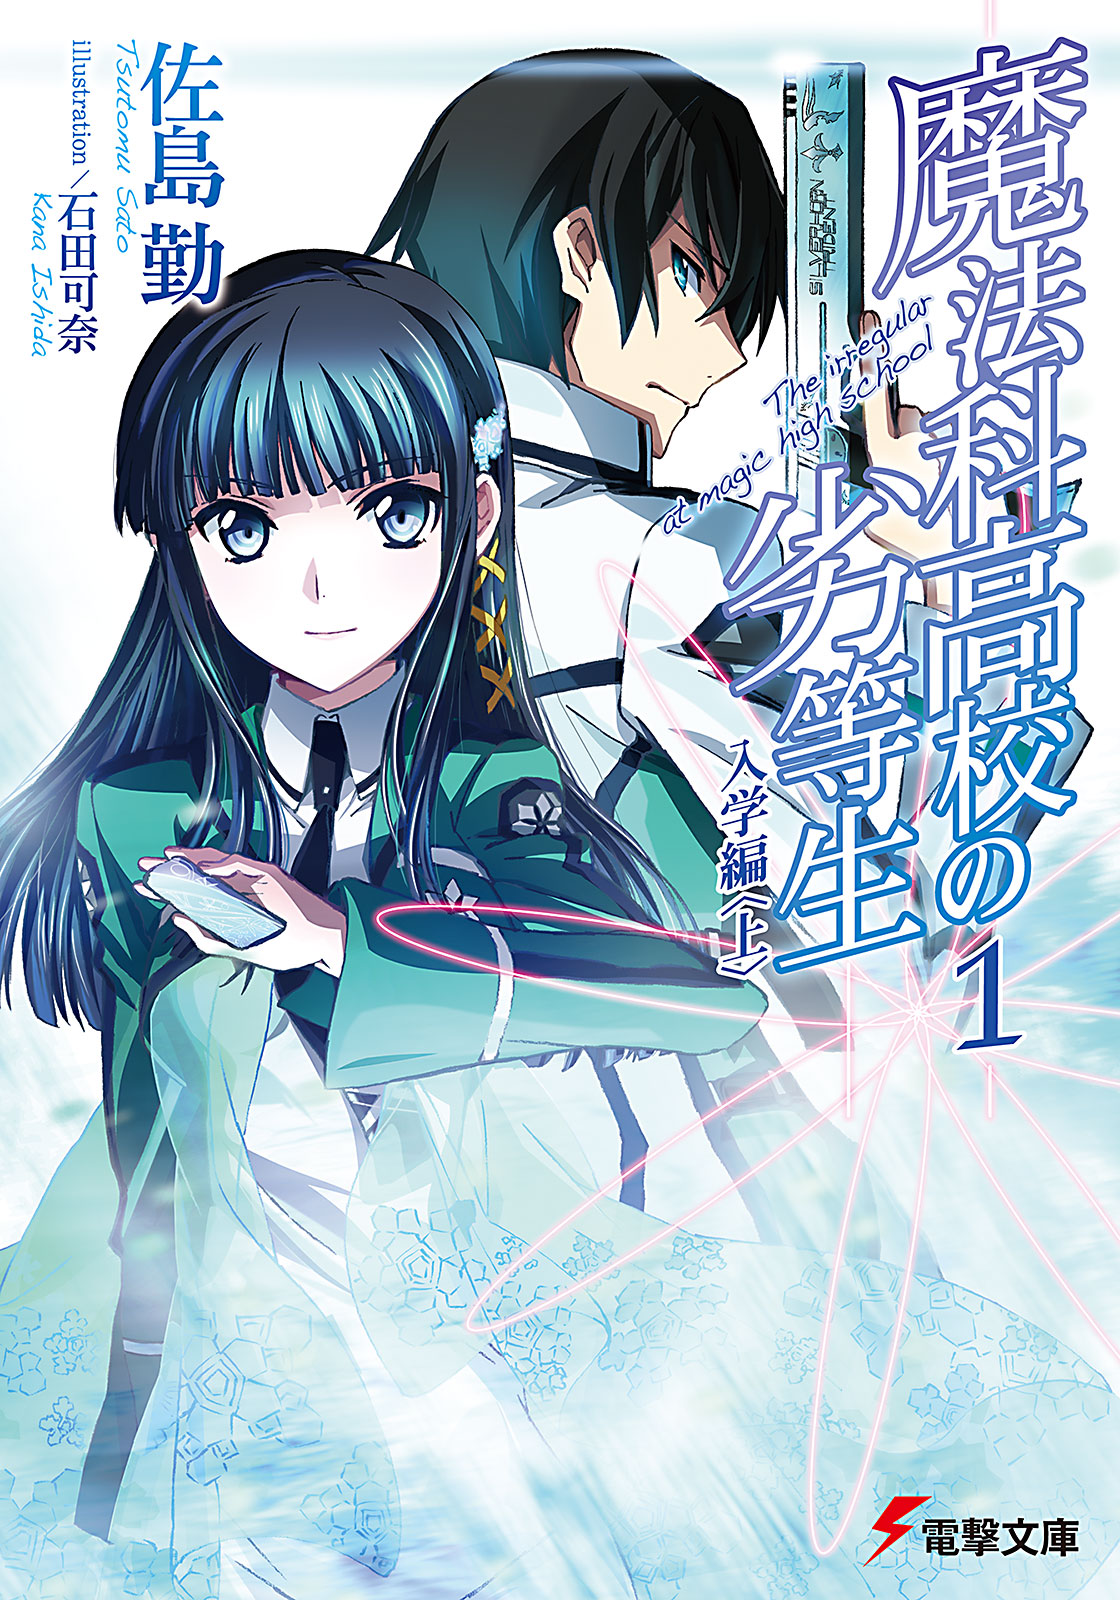 Light Novel | Mahouka Koukou no Rettousei | Fandom